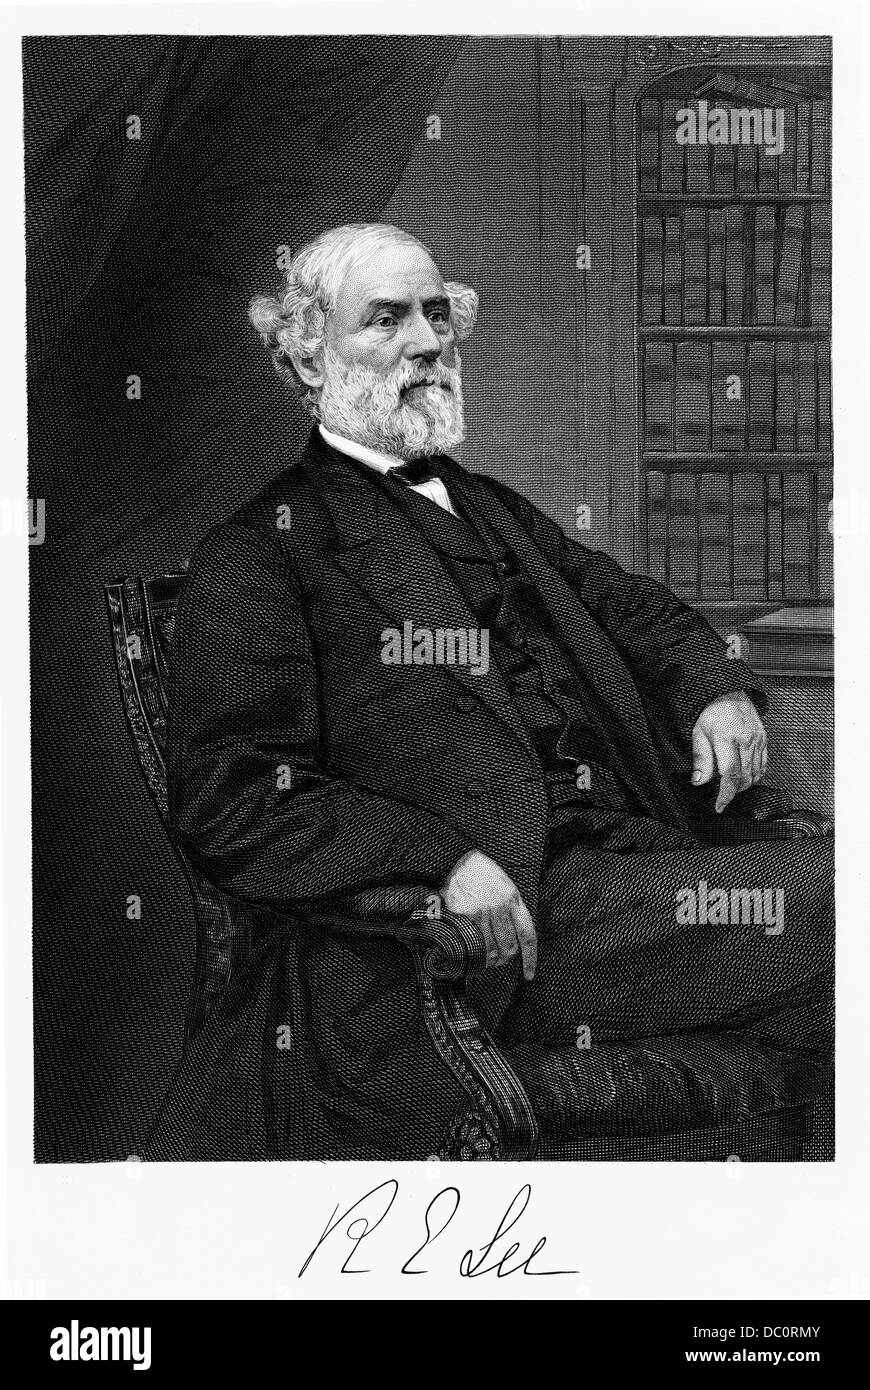 1800s 1860s PORTRAITE OF ROBERT E LEE CONFEDERATE GENERAL DURING AMERICAN CIVIL WAR Stock Photo